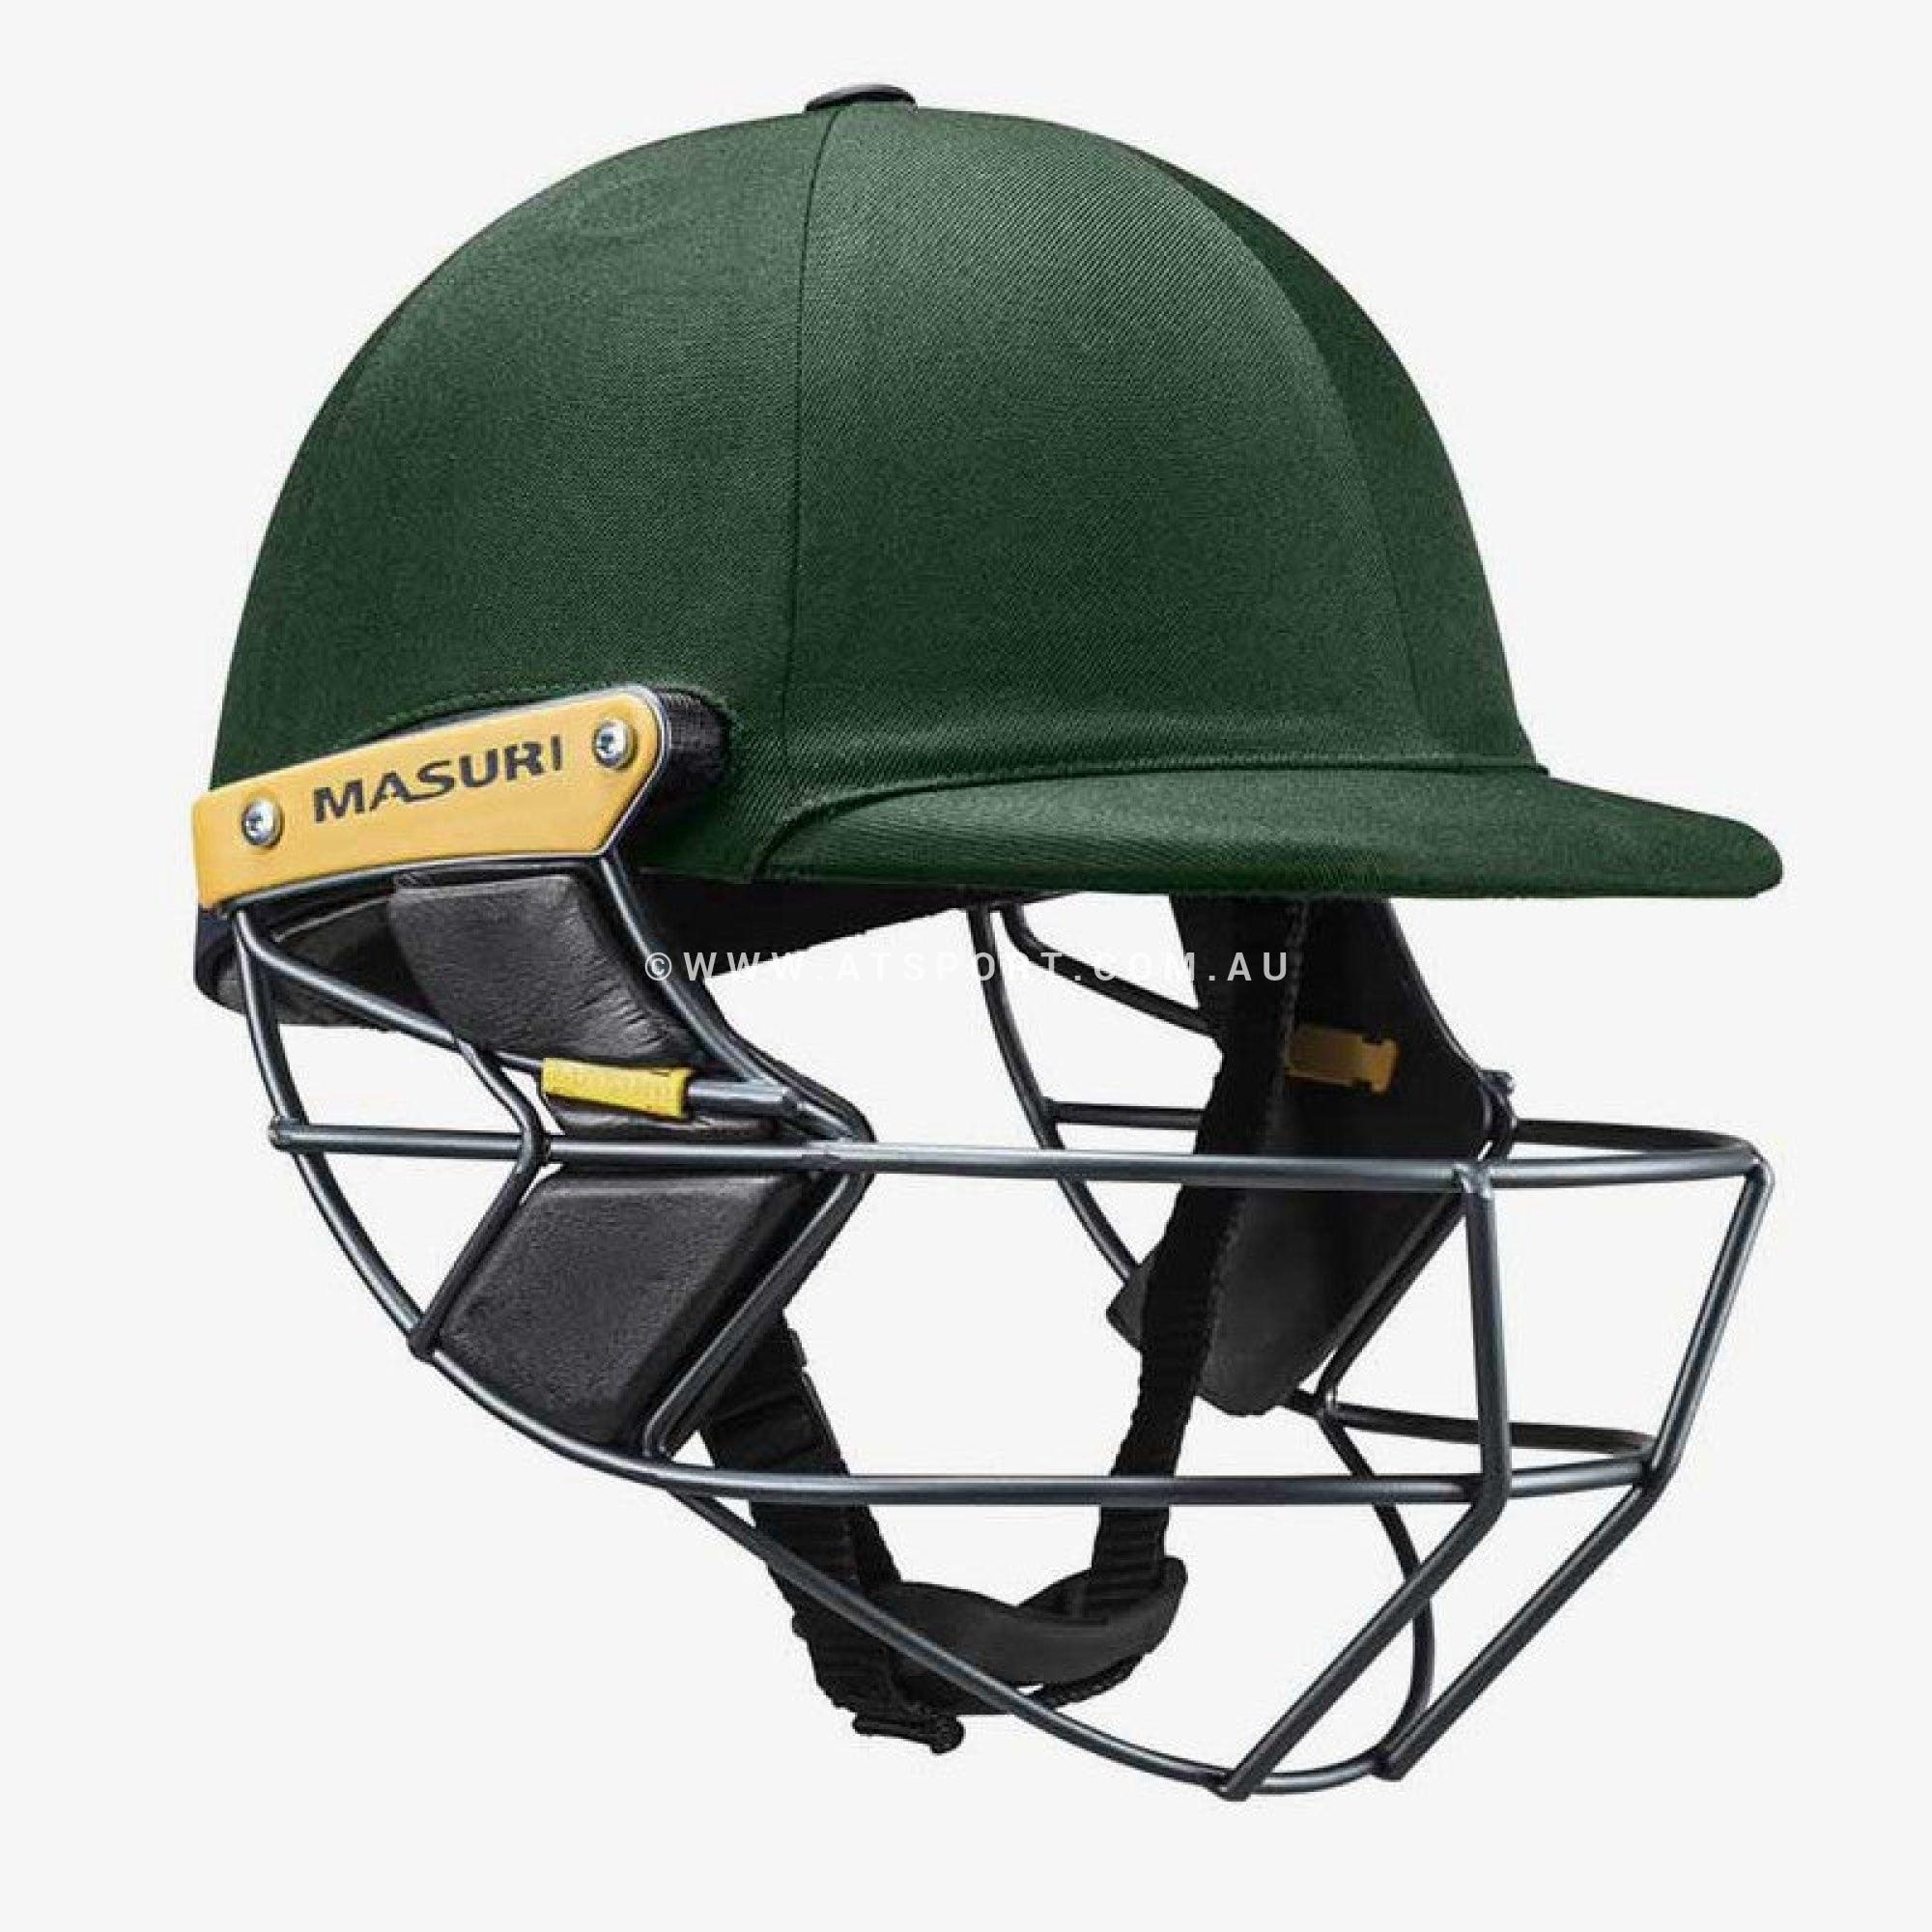 Masuri T LINE STEEL Grille Cricket Helmet - AT Sports